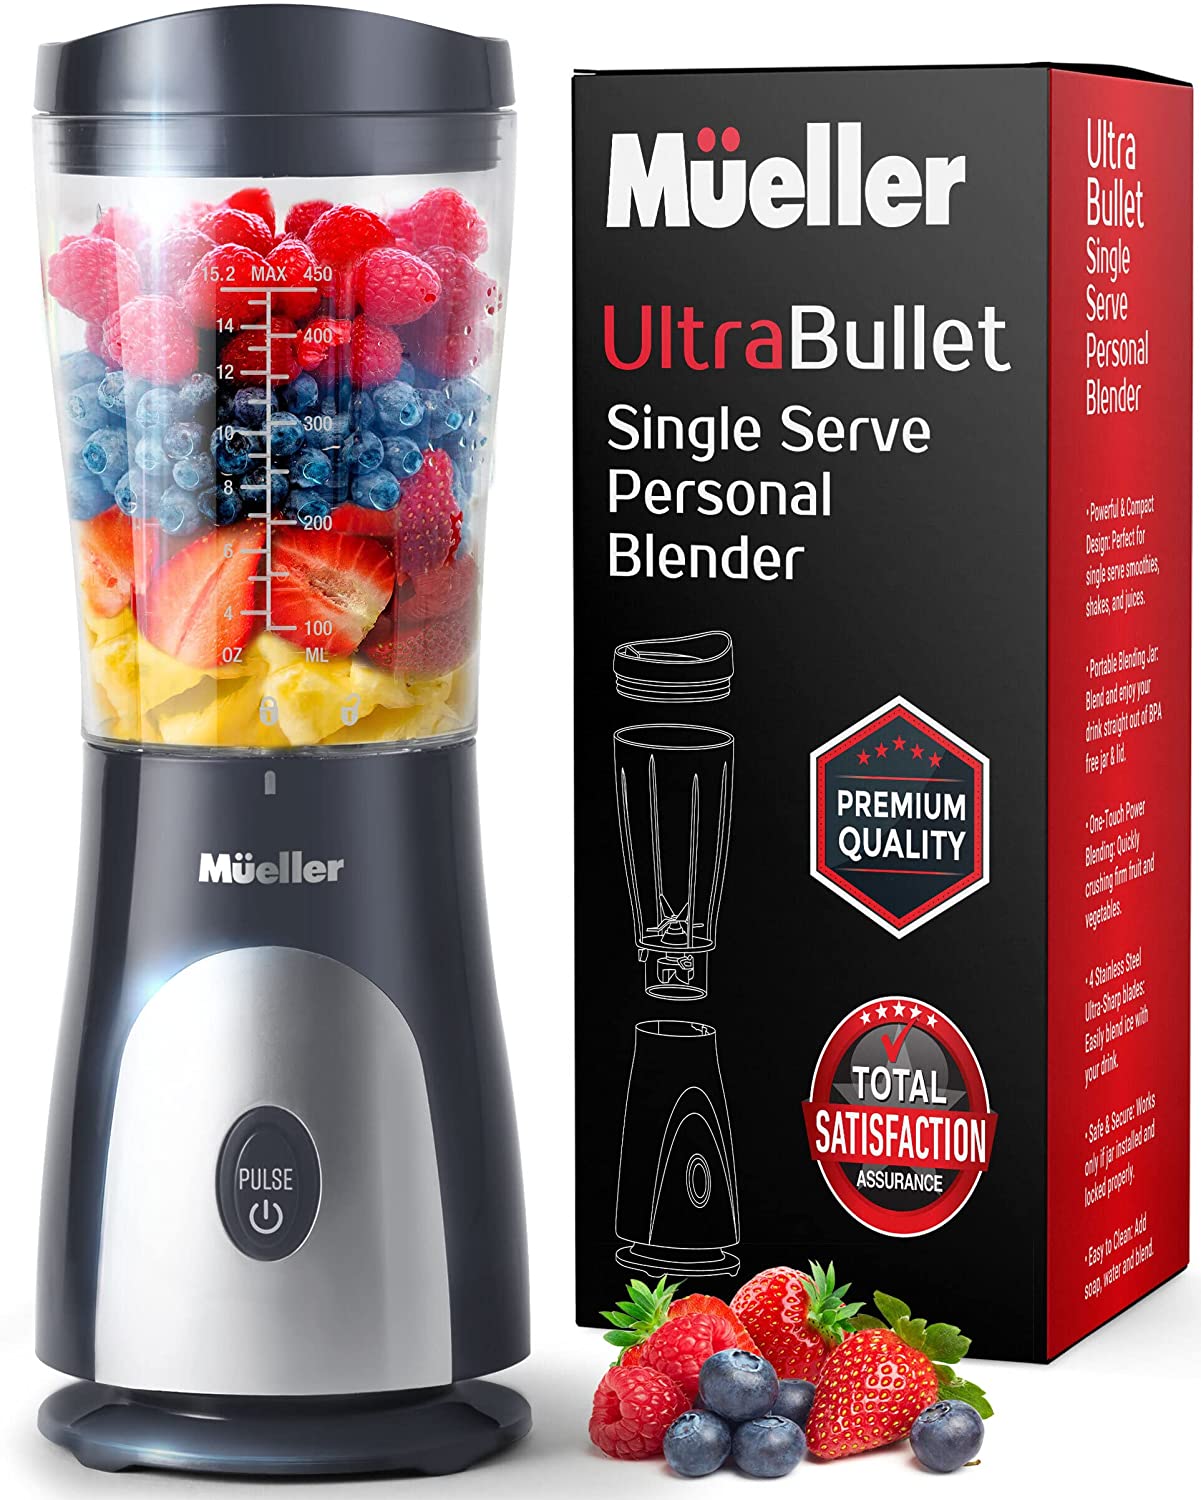 Magic Bullet® Single-Serve Blender